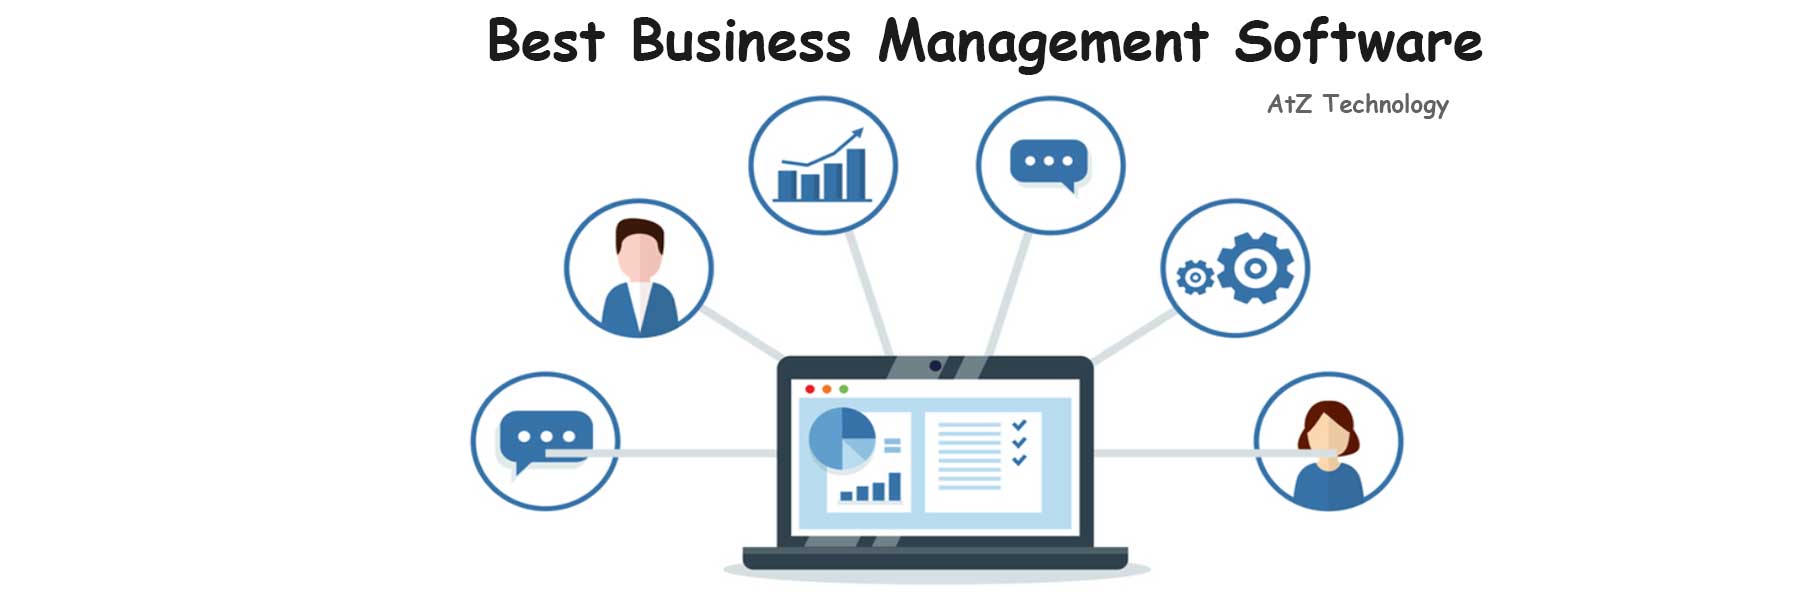 Best Business Management Software